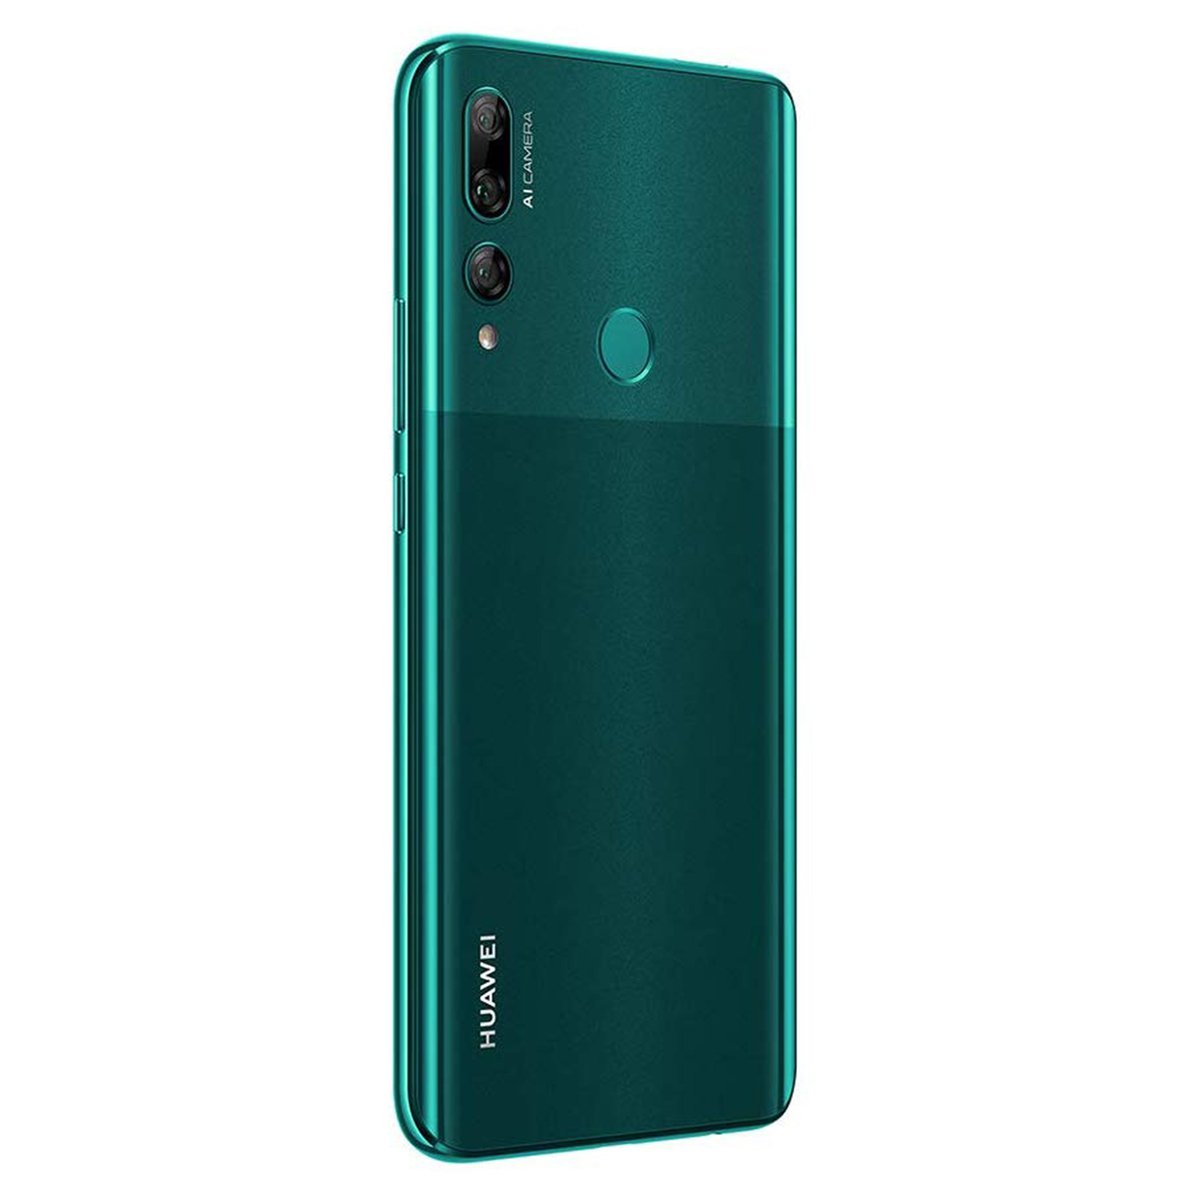 Huawei Y9 Prime 2019 64GB Emerald Green